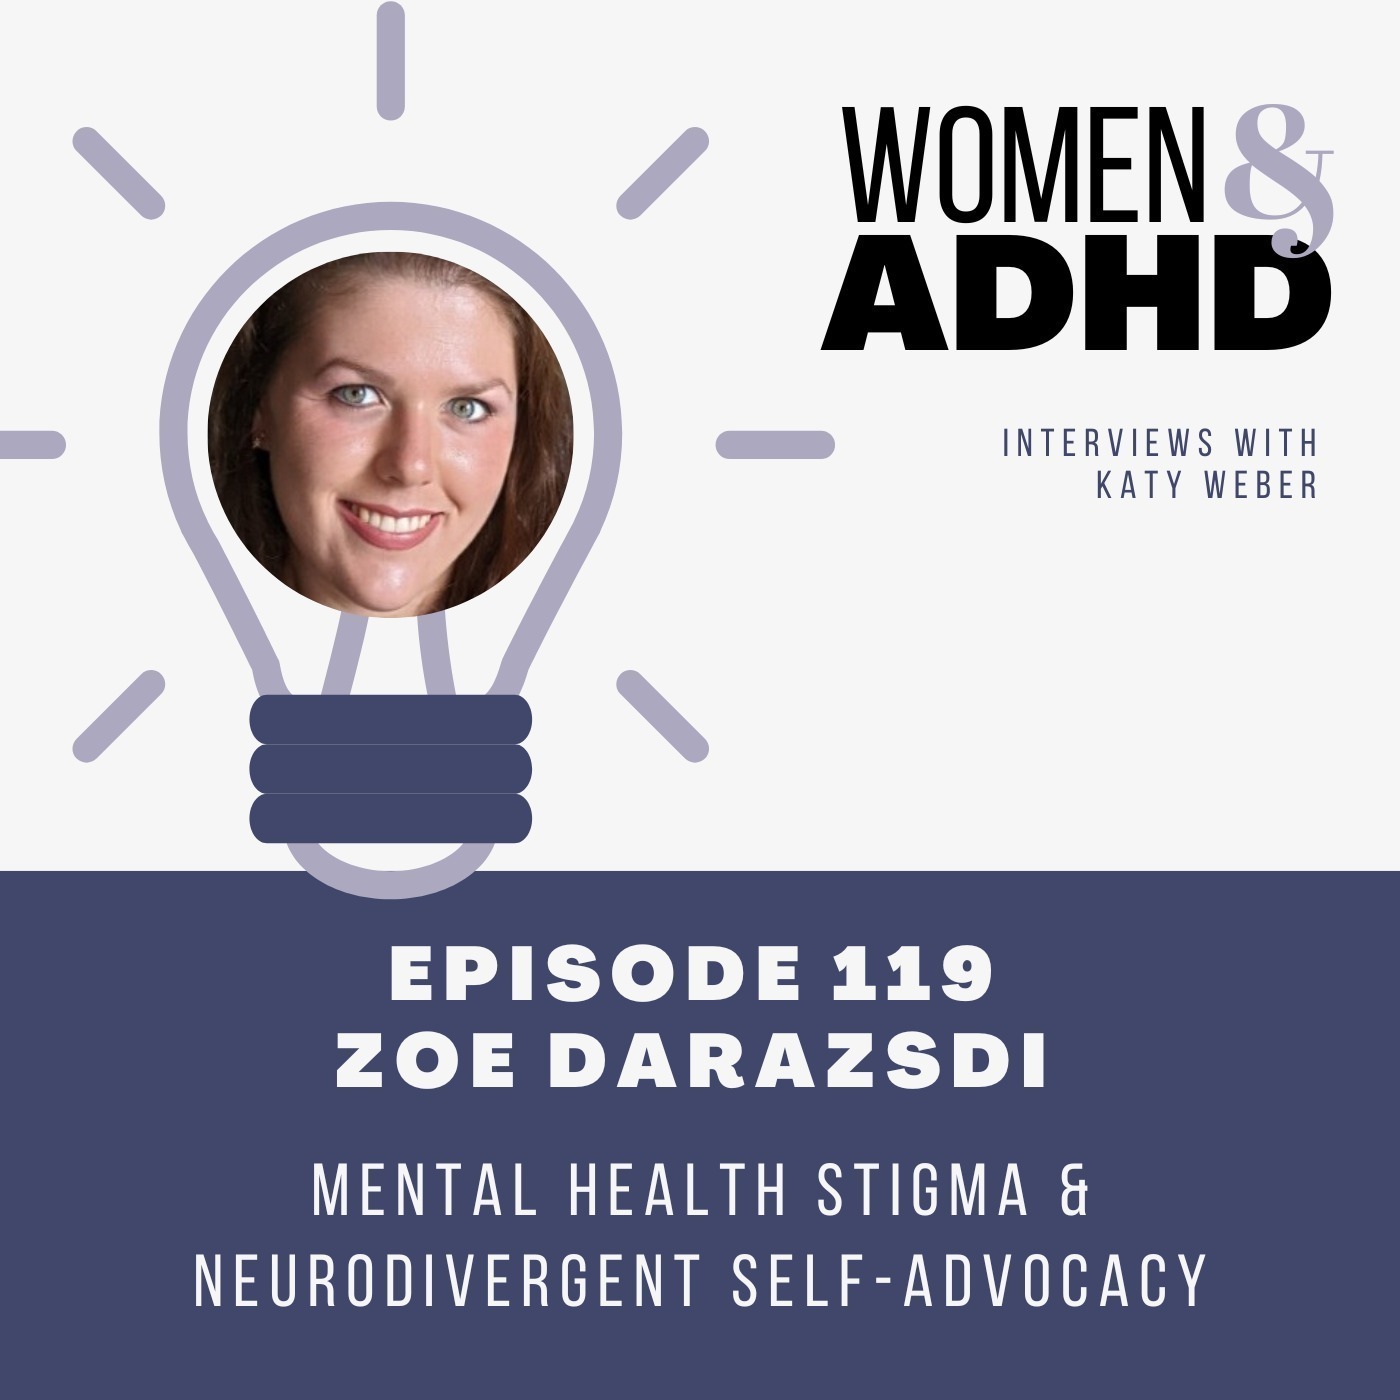 Zoe Darazsdi: Mental health stigma & neurodivergent self-advocacy